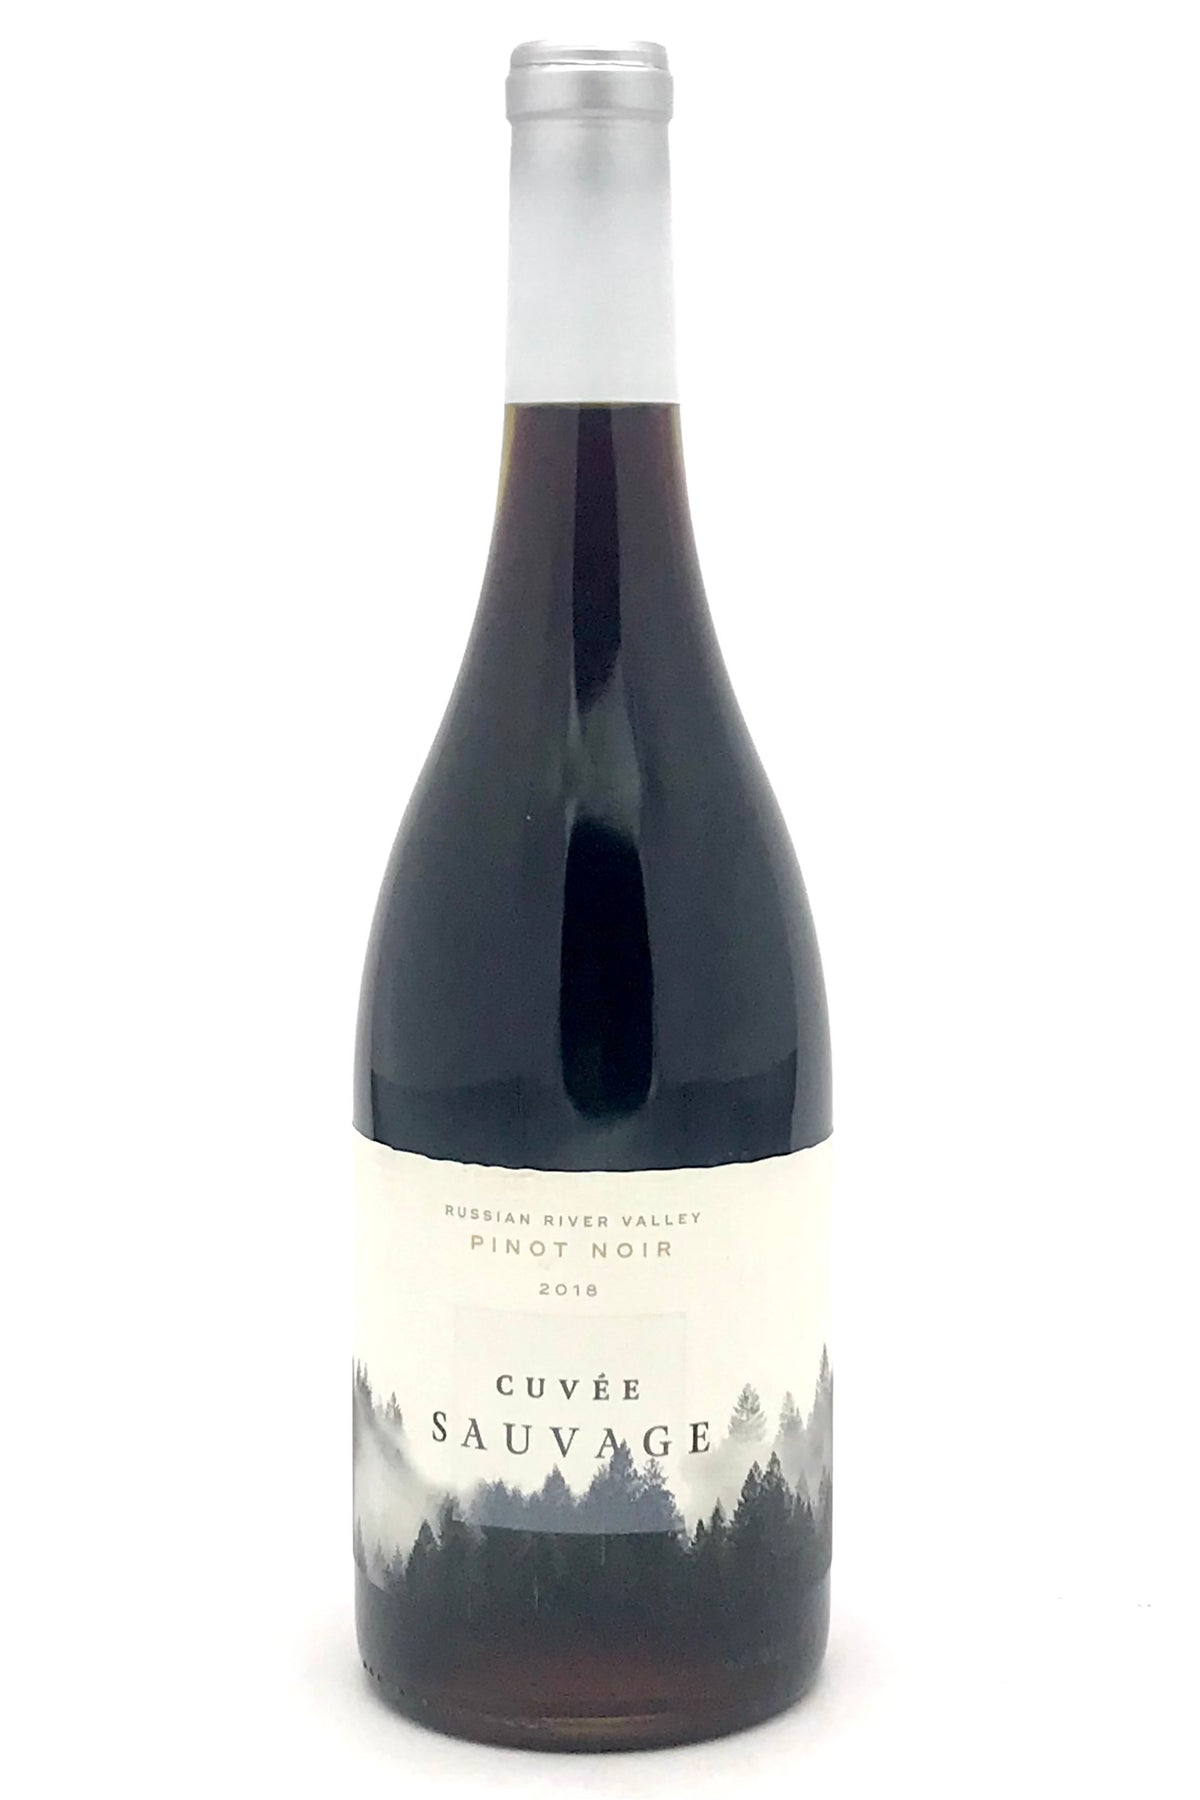 Cuvee Sauvage 2018 Pinot Noir Russian River